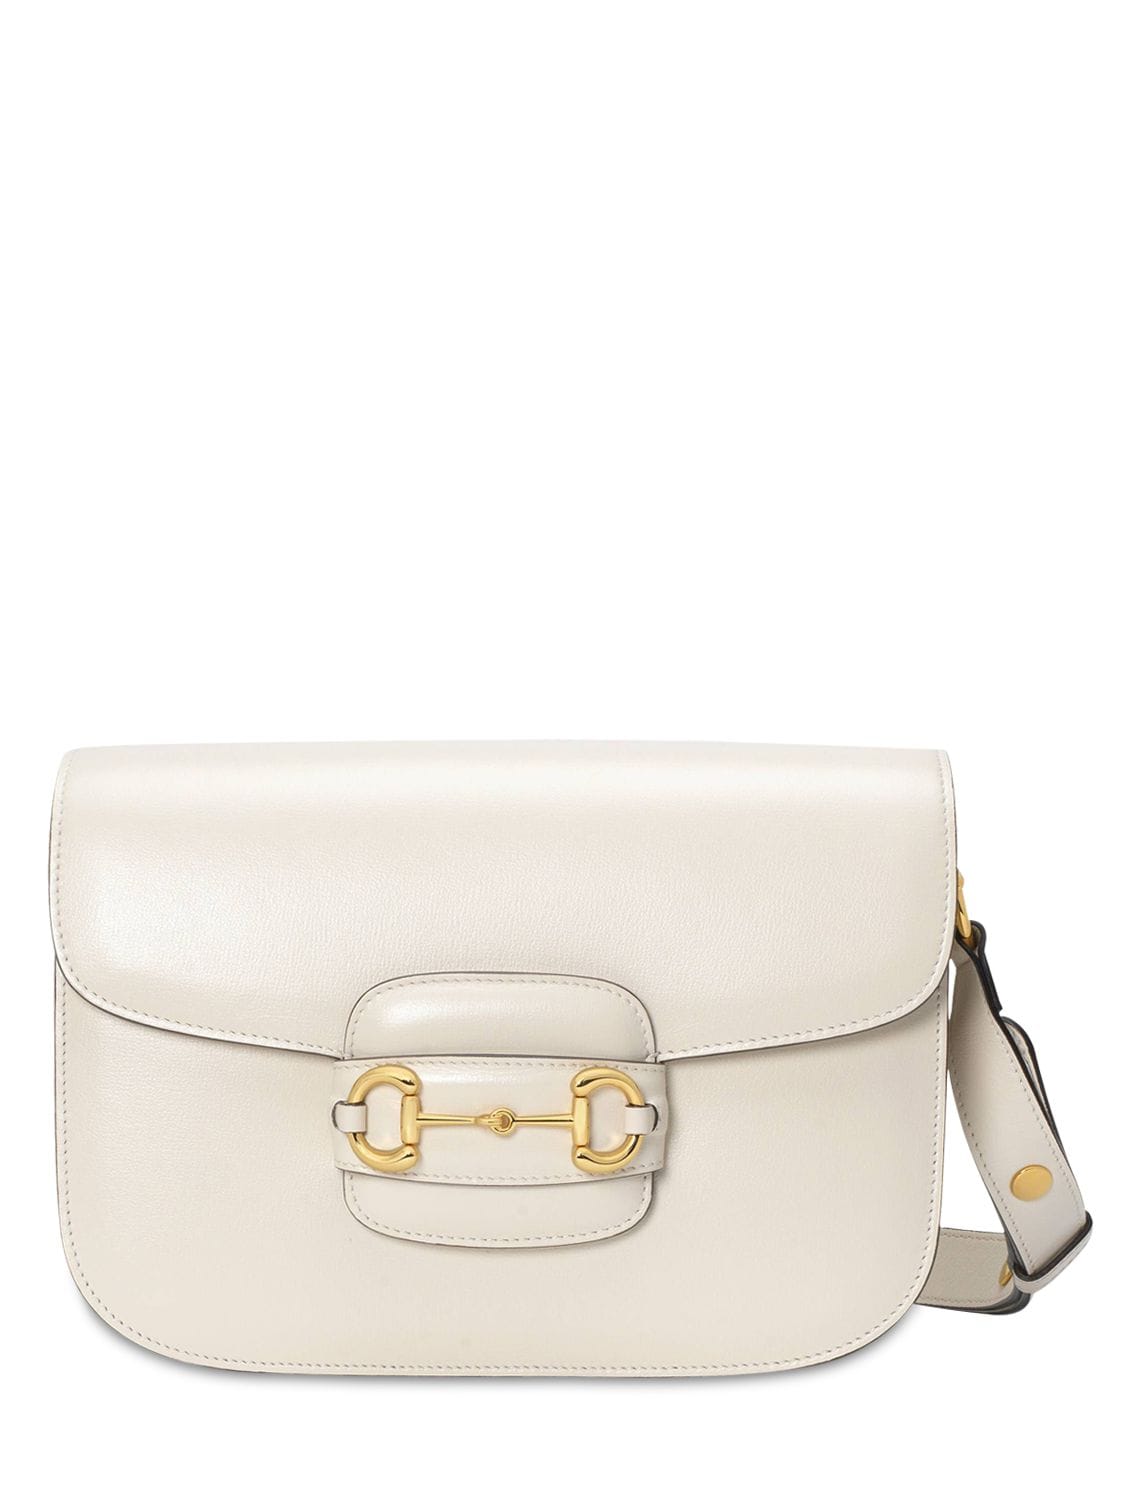 Gucci 1955 Horsebit Azalea Leather Bag In Mystic White